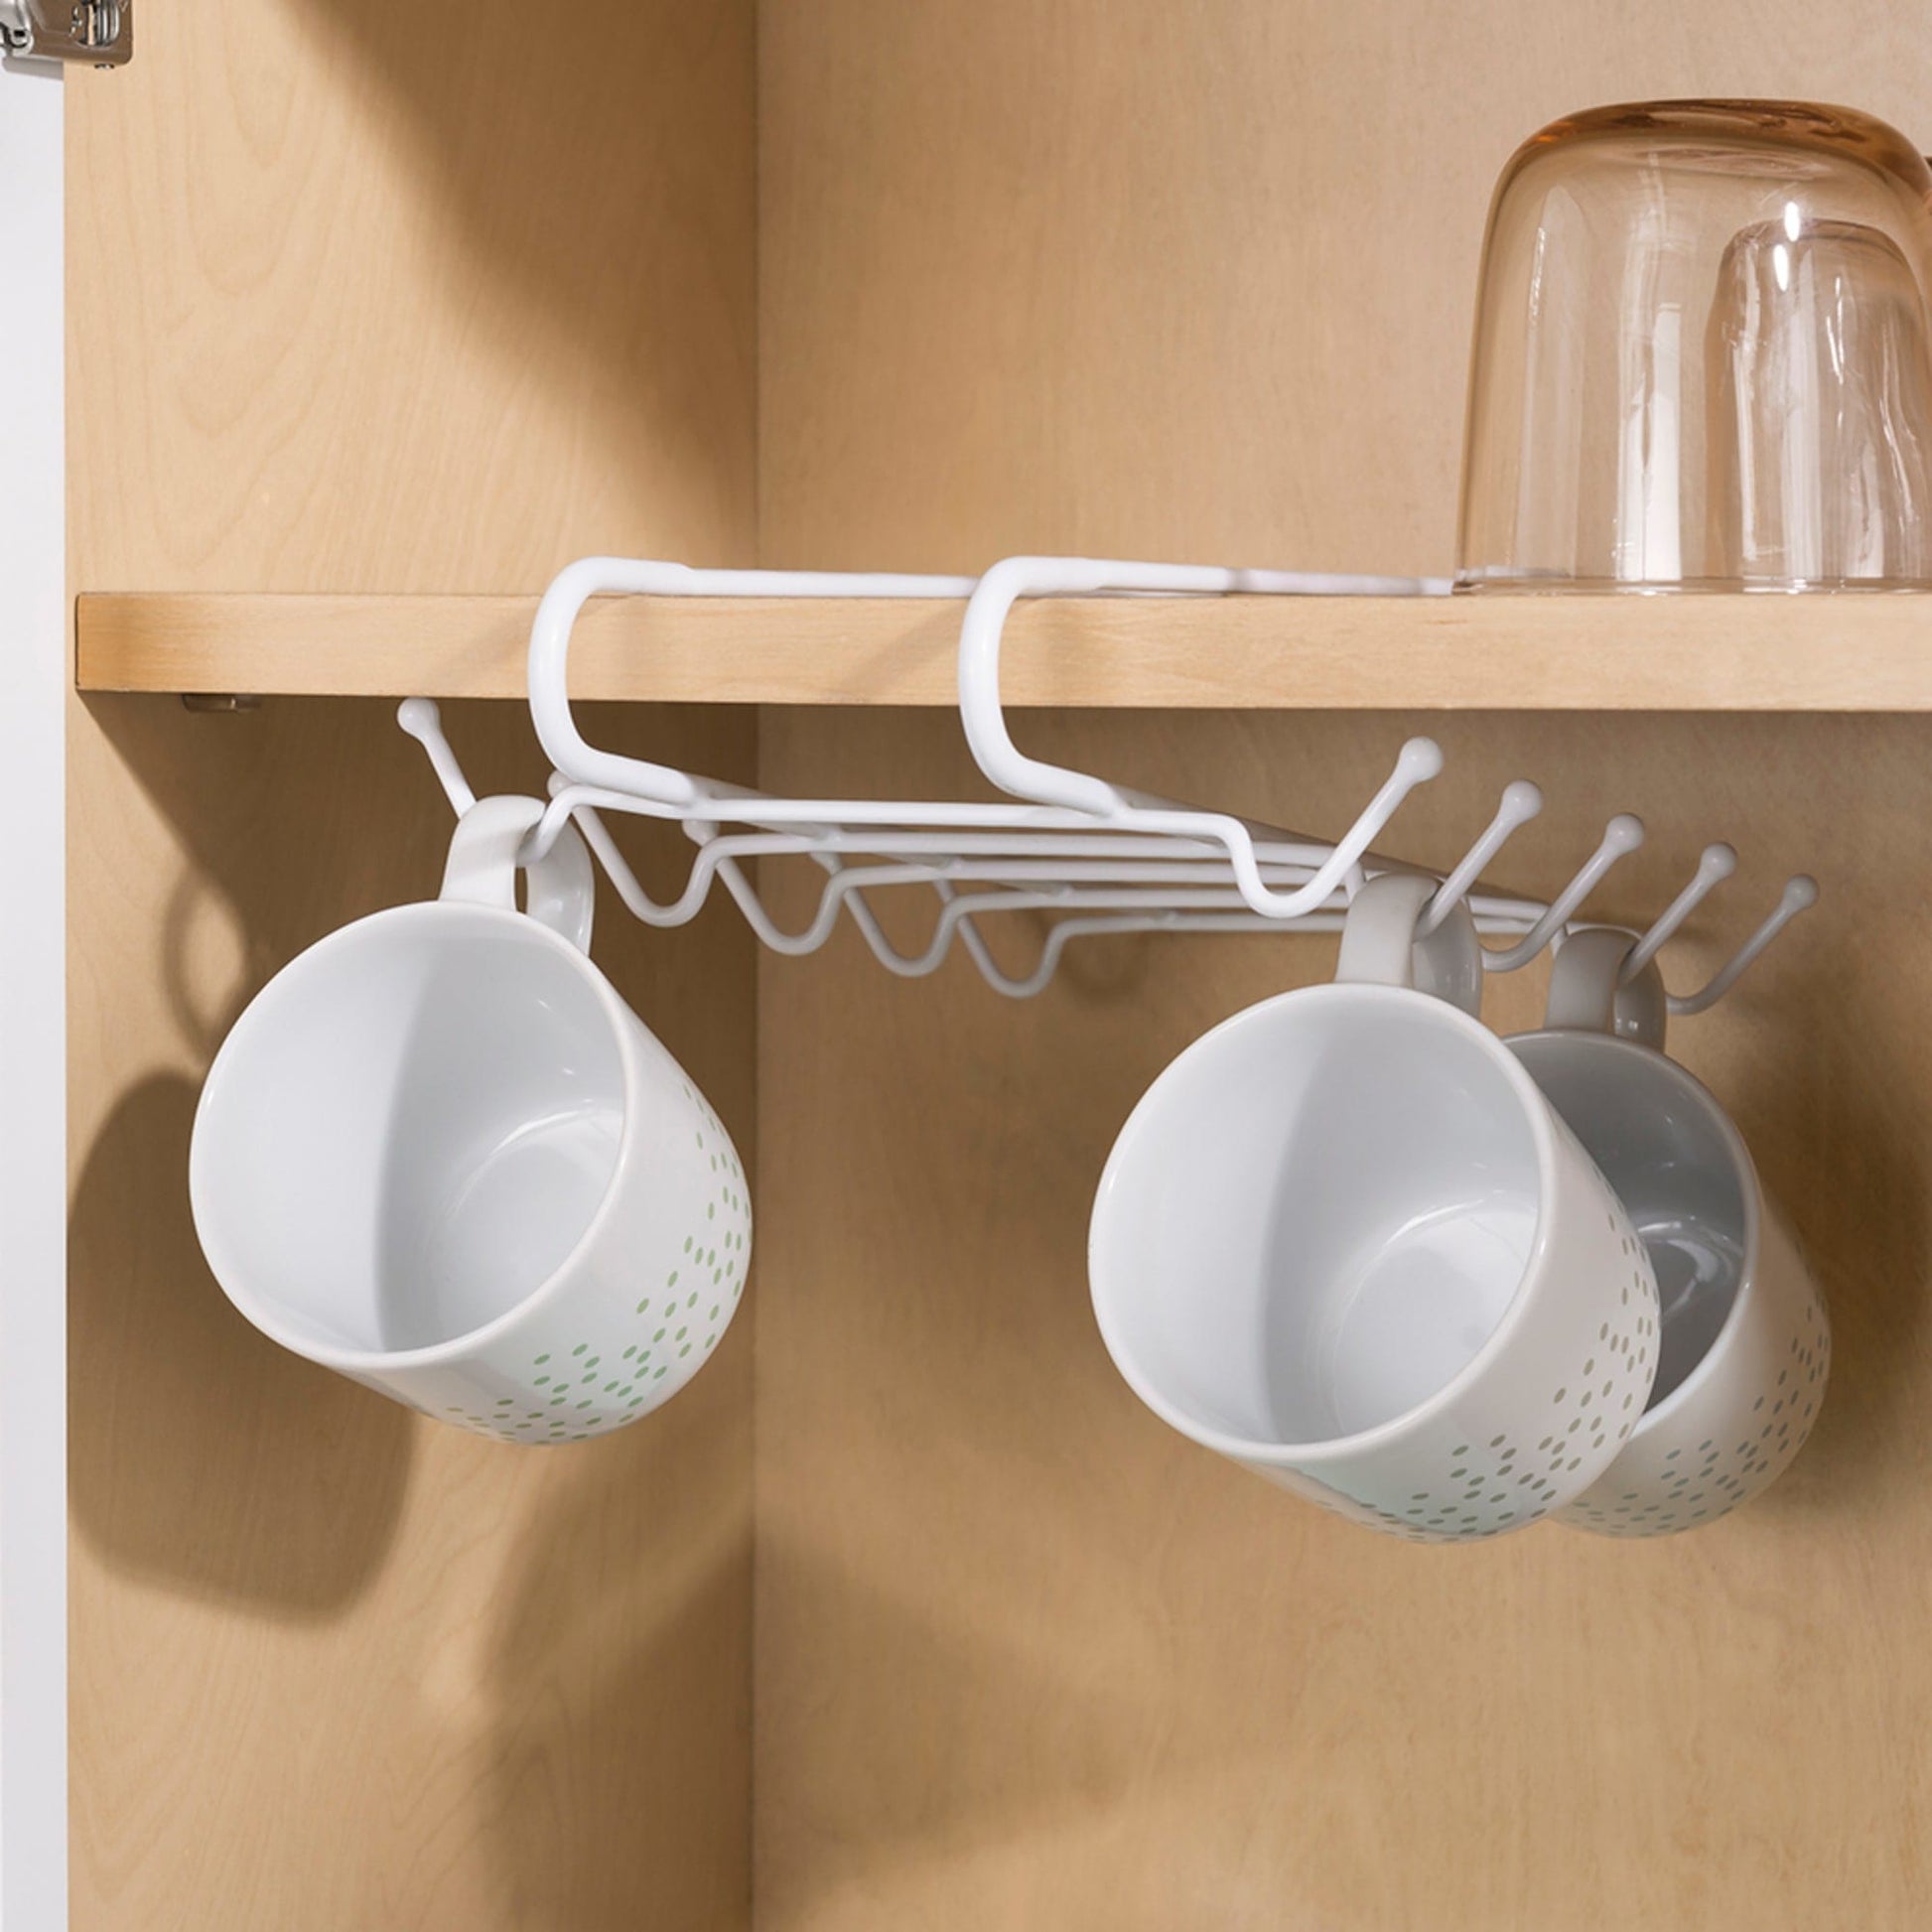 Under Shelf Mug Holder, Hanging Mug Rack